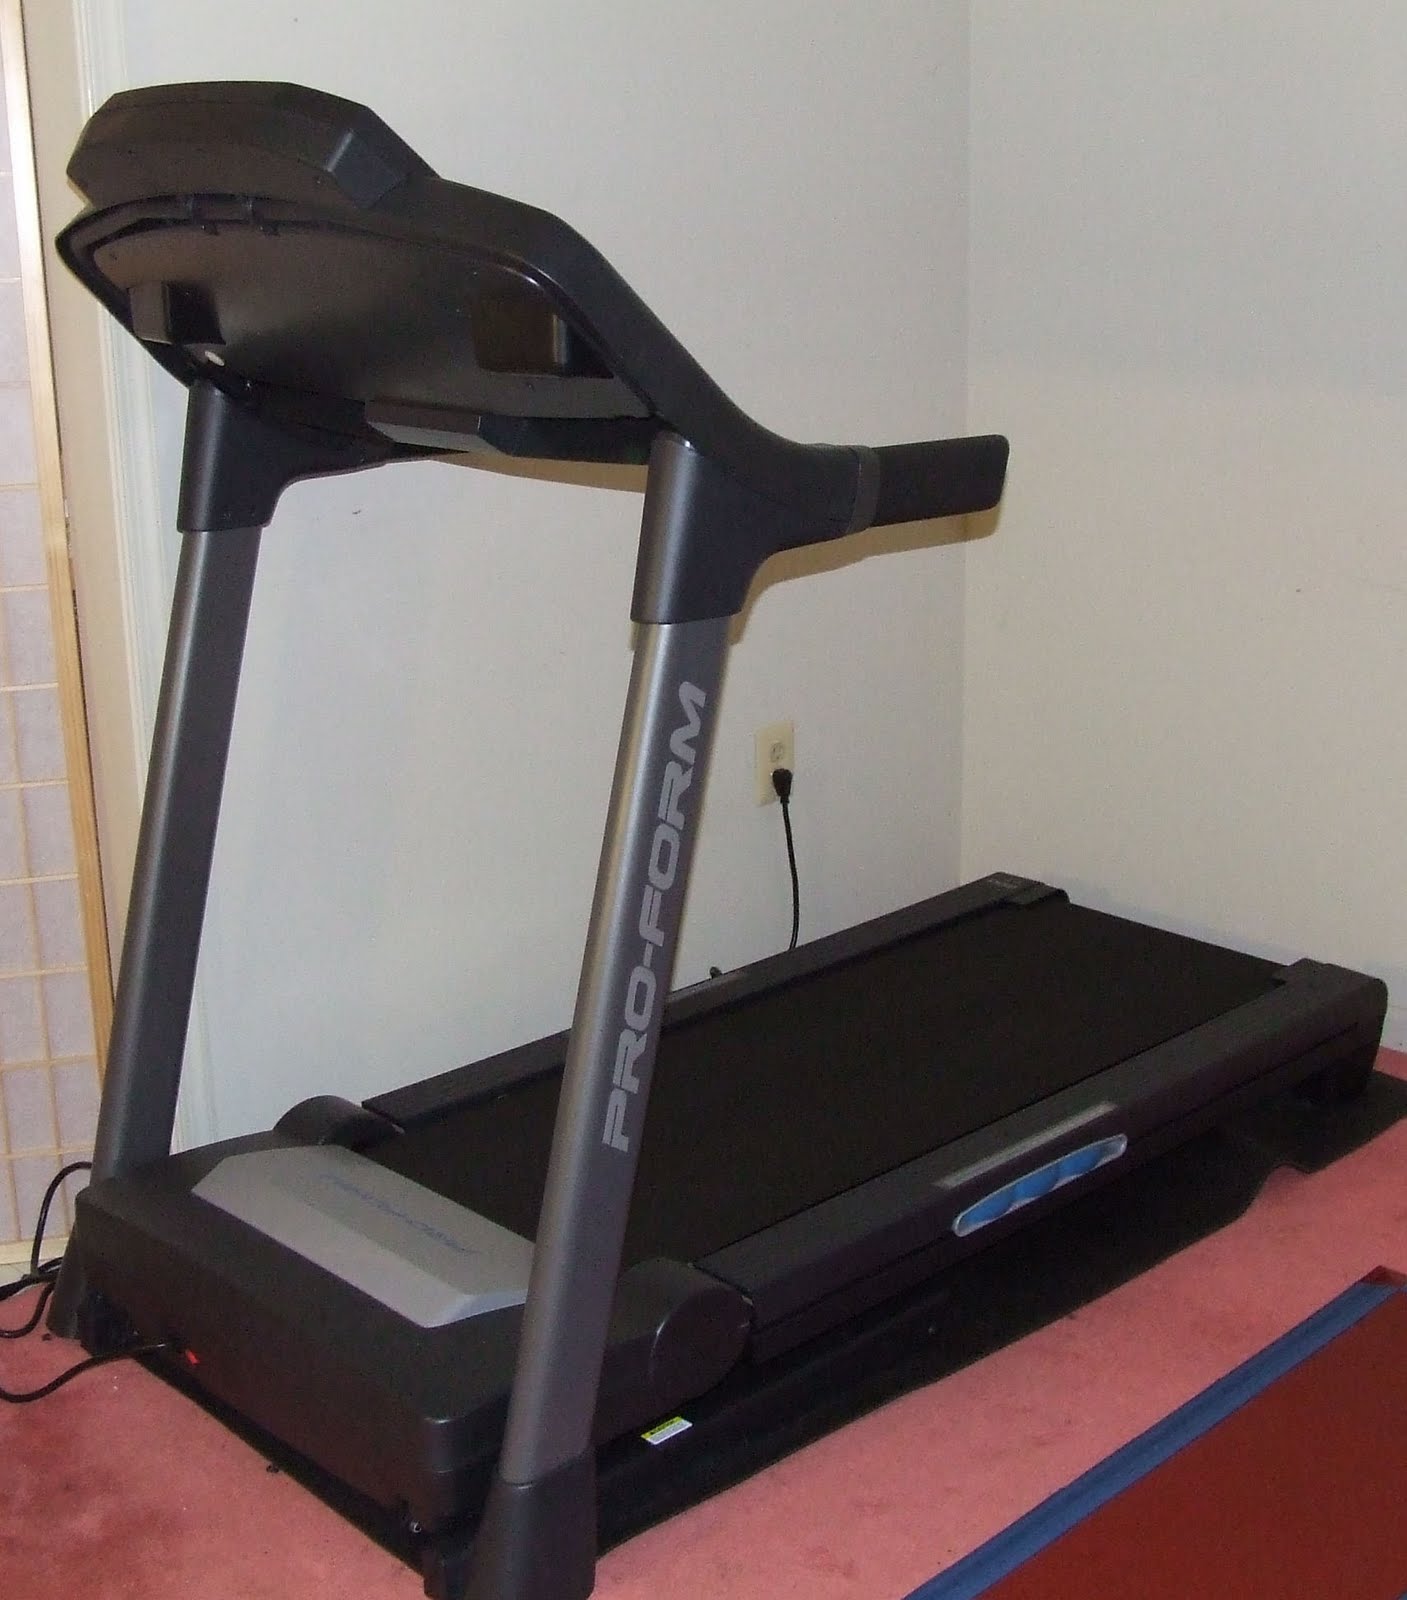 Saundra: The Pro-Form 600 LT Treadmill - Thoughts